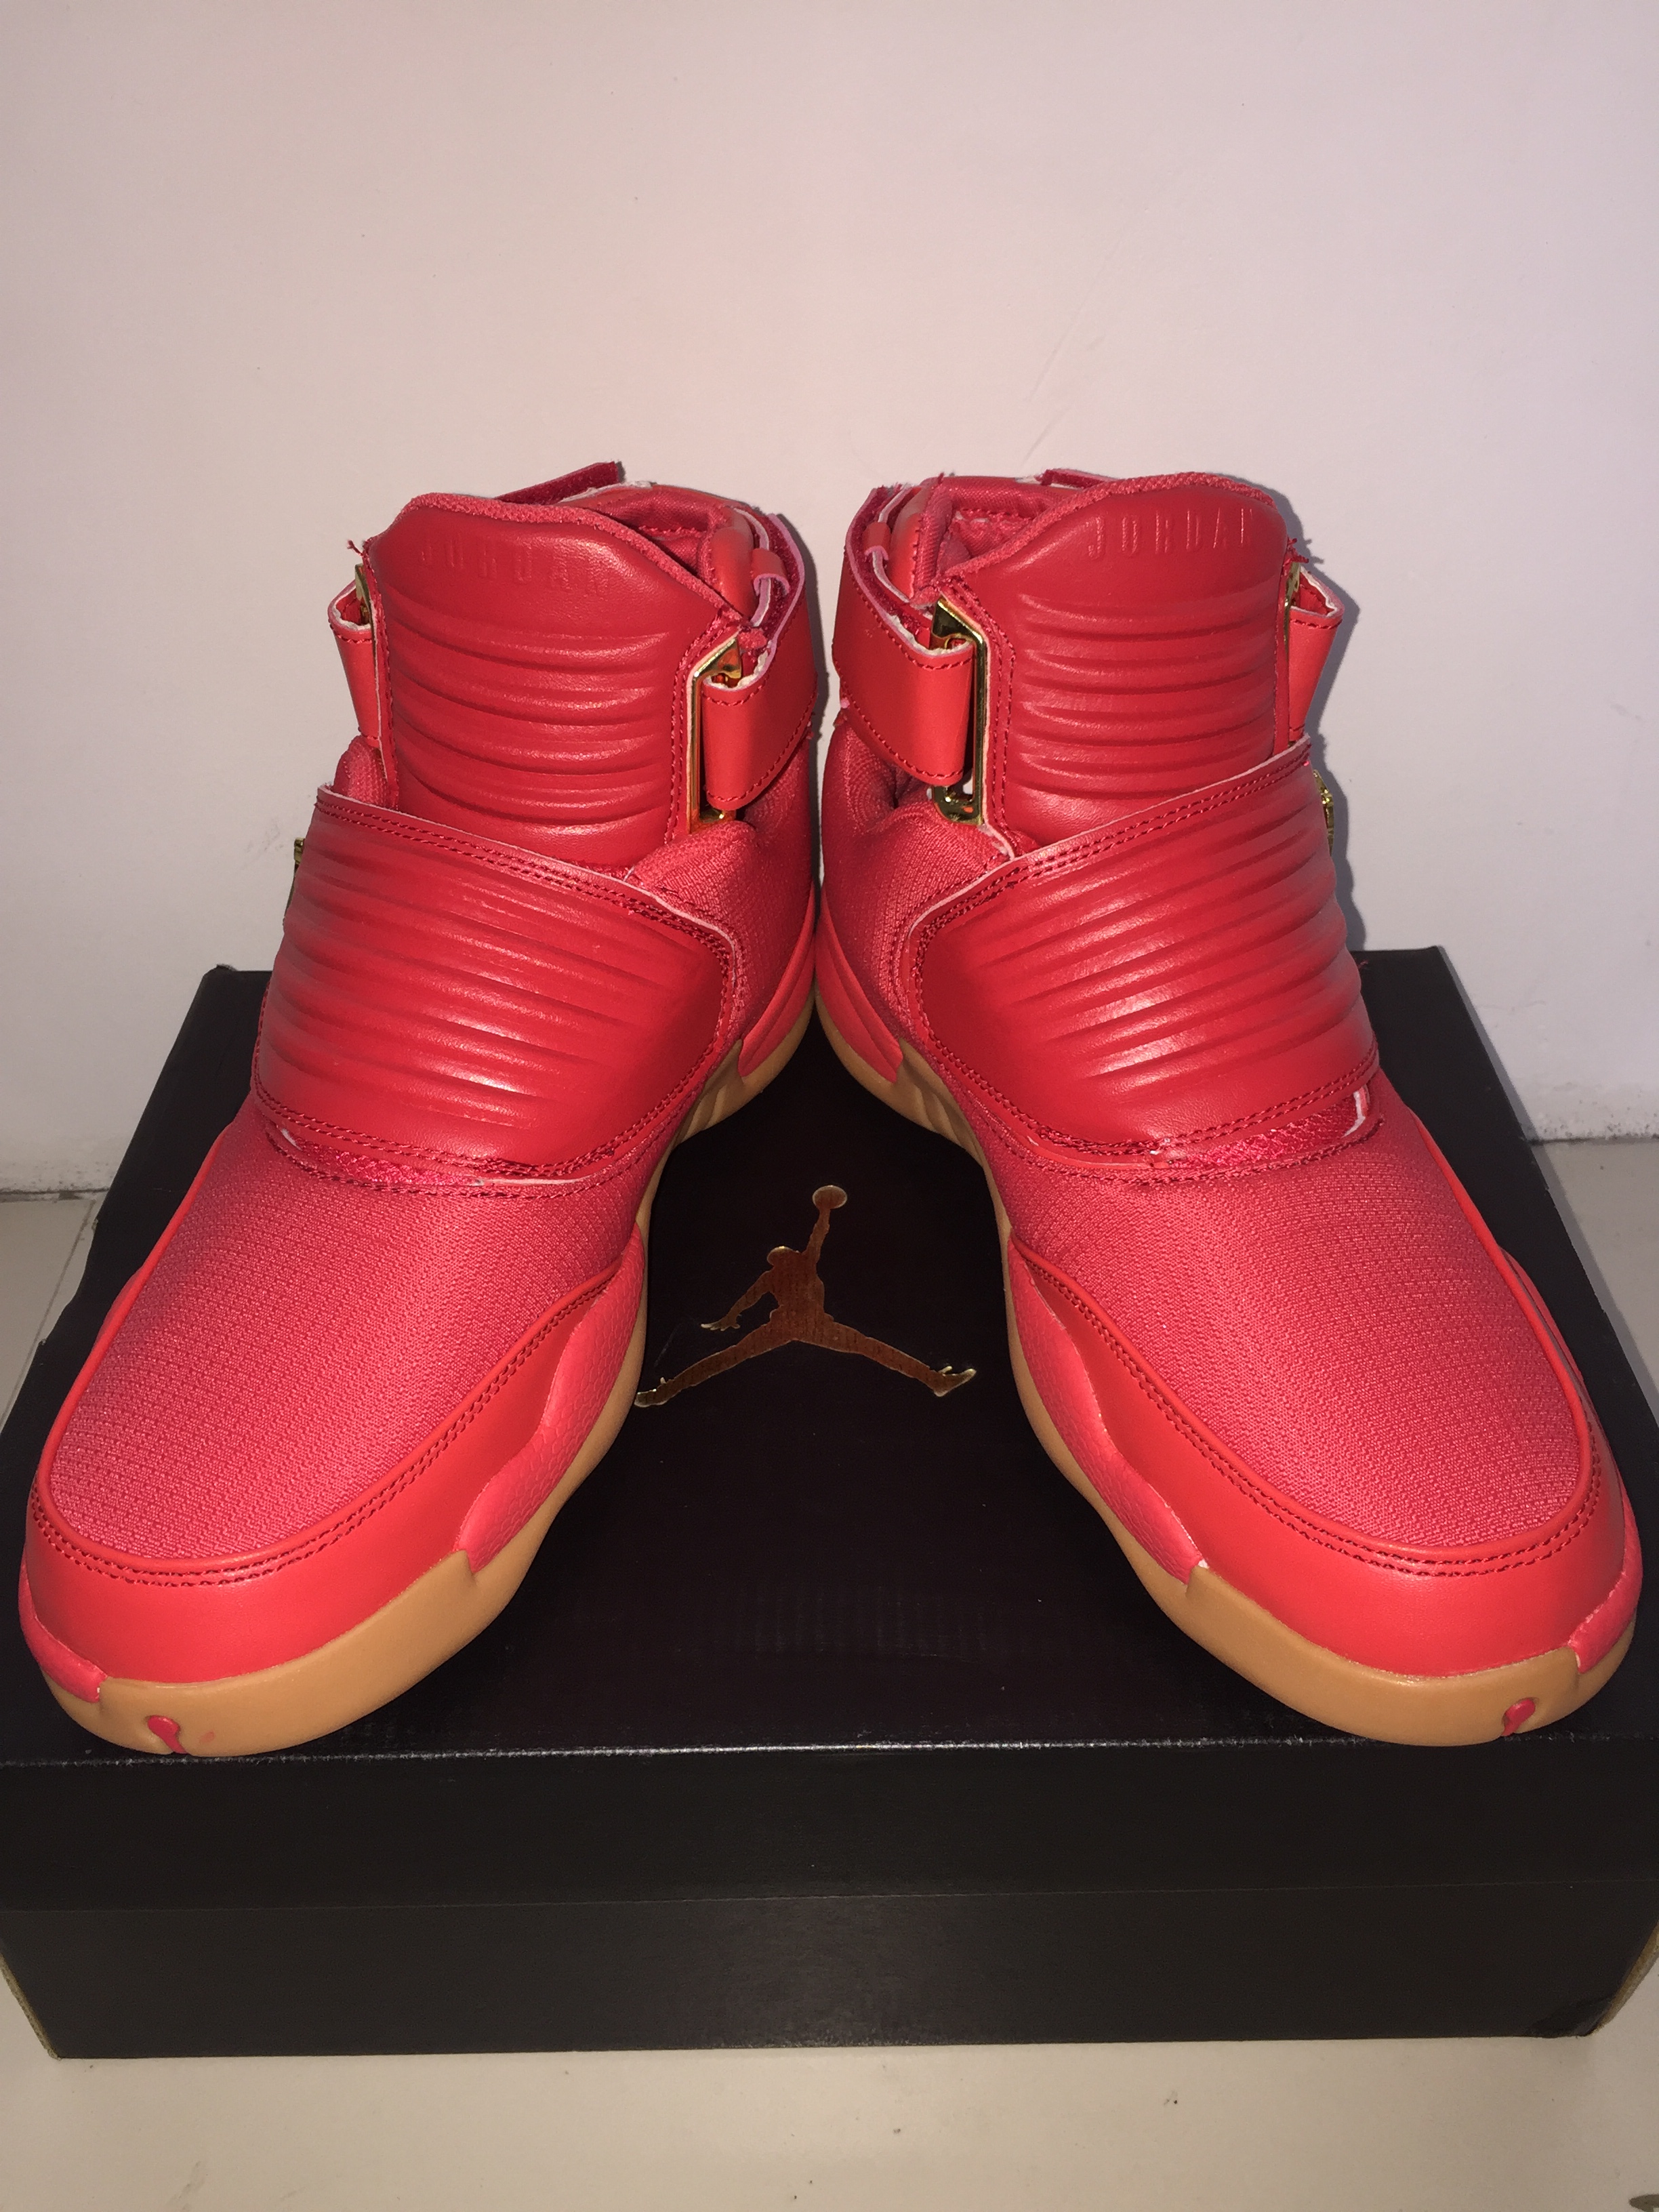 New Air Jordan Generation 23 Red Gum Sole Shoes